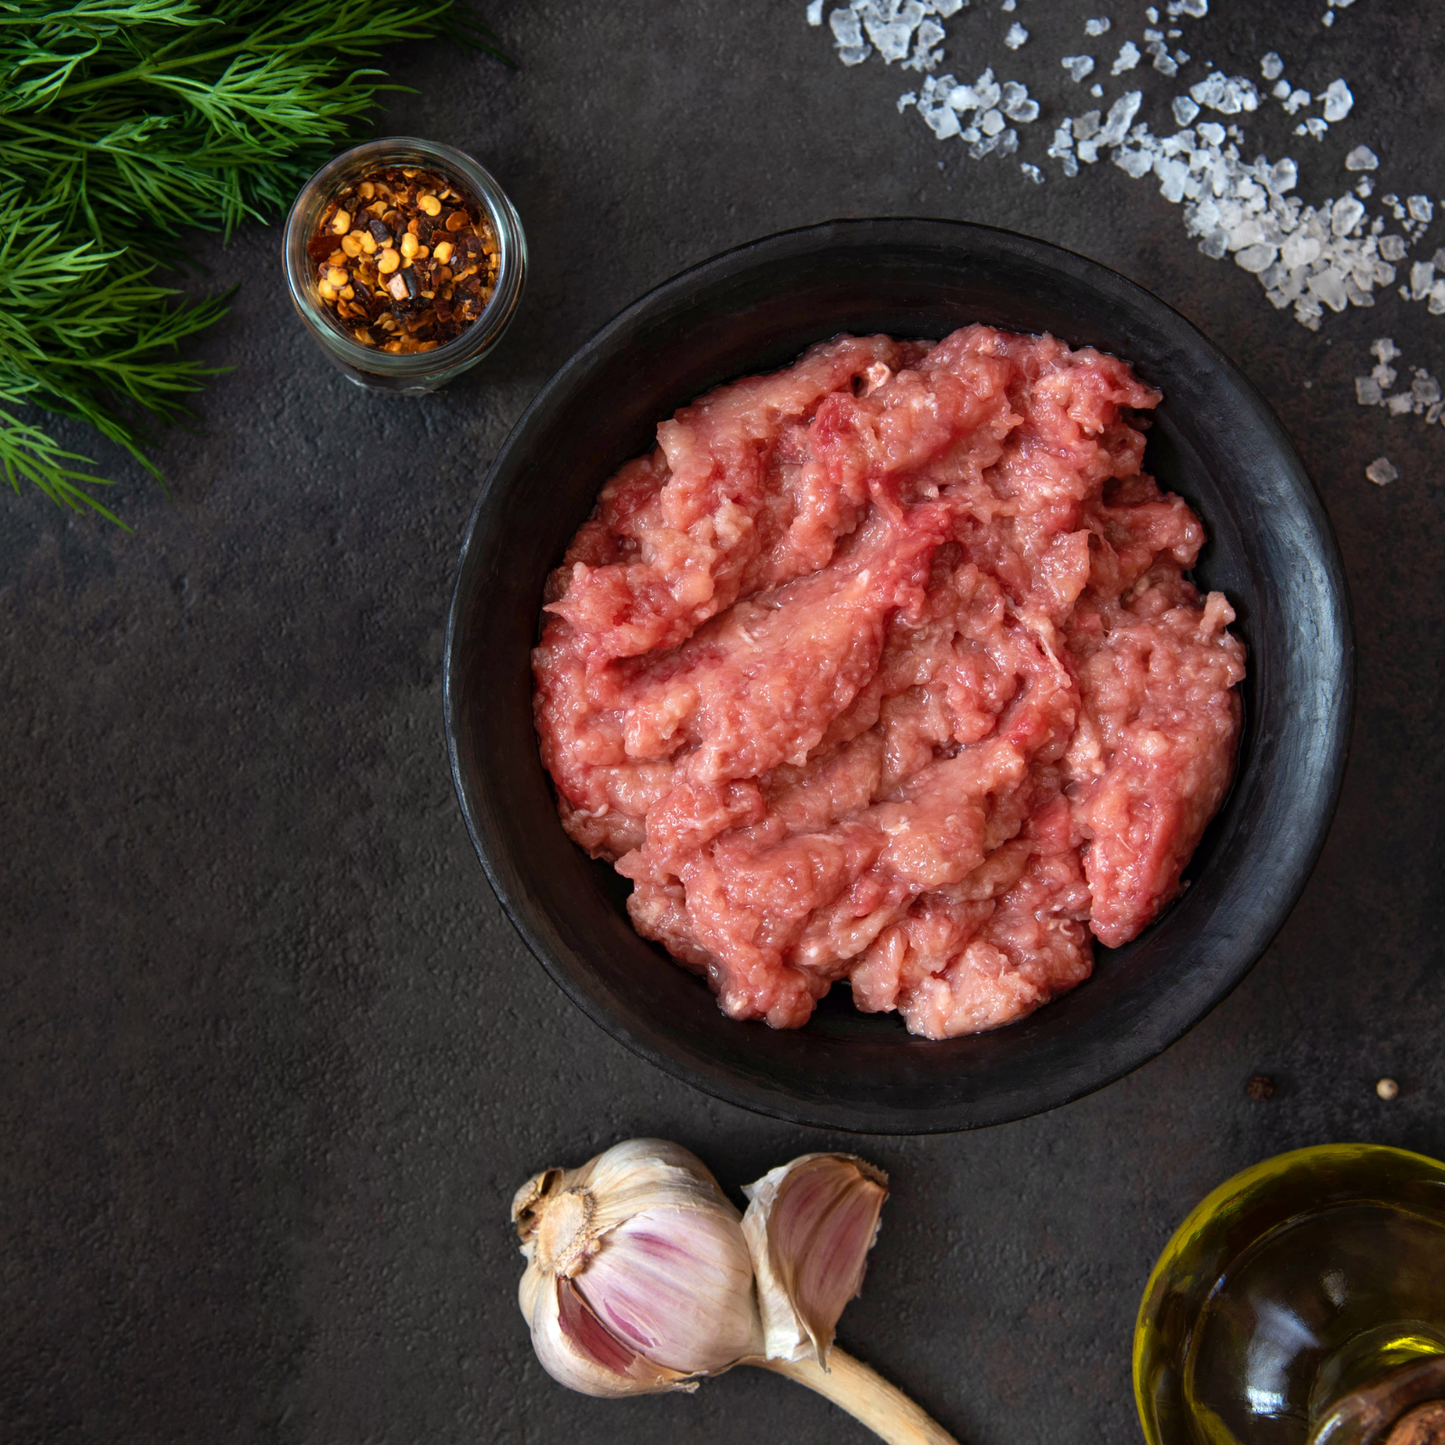 Homemade Beef Sausage Meat 1kg - Frozen